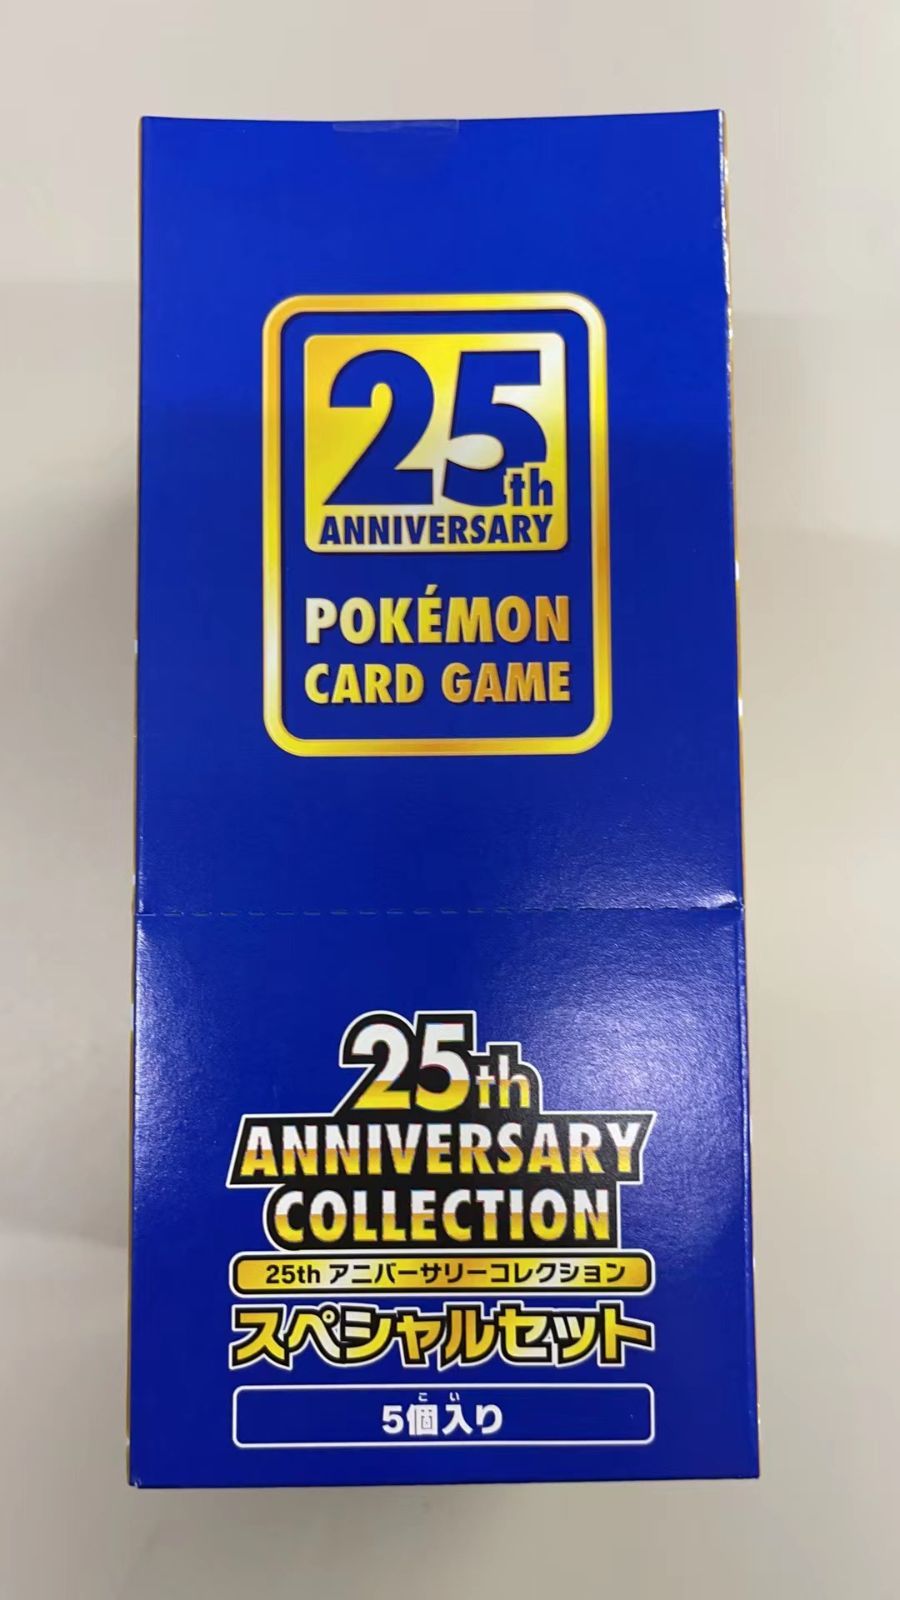 25th Anniversary Collection　スペシャルセット5個入